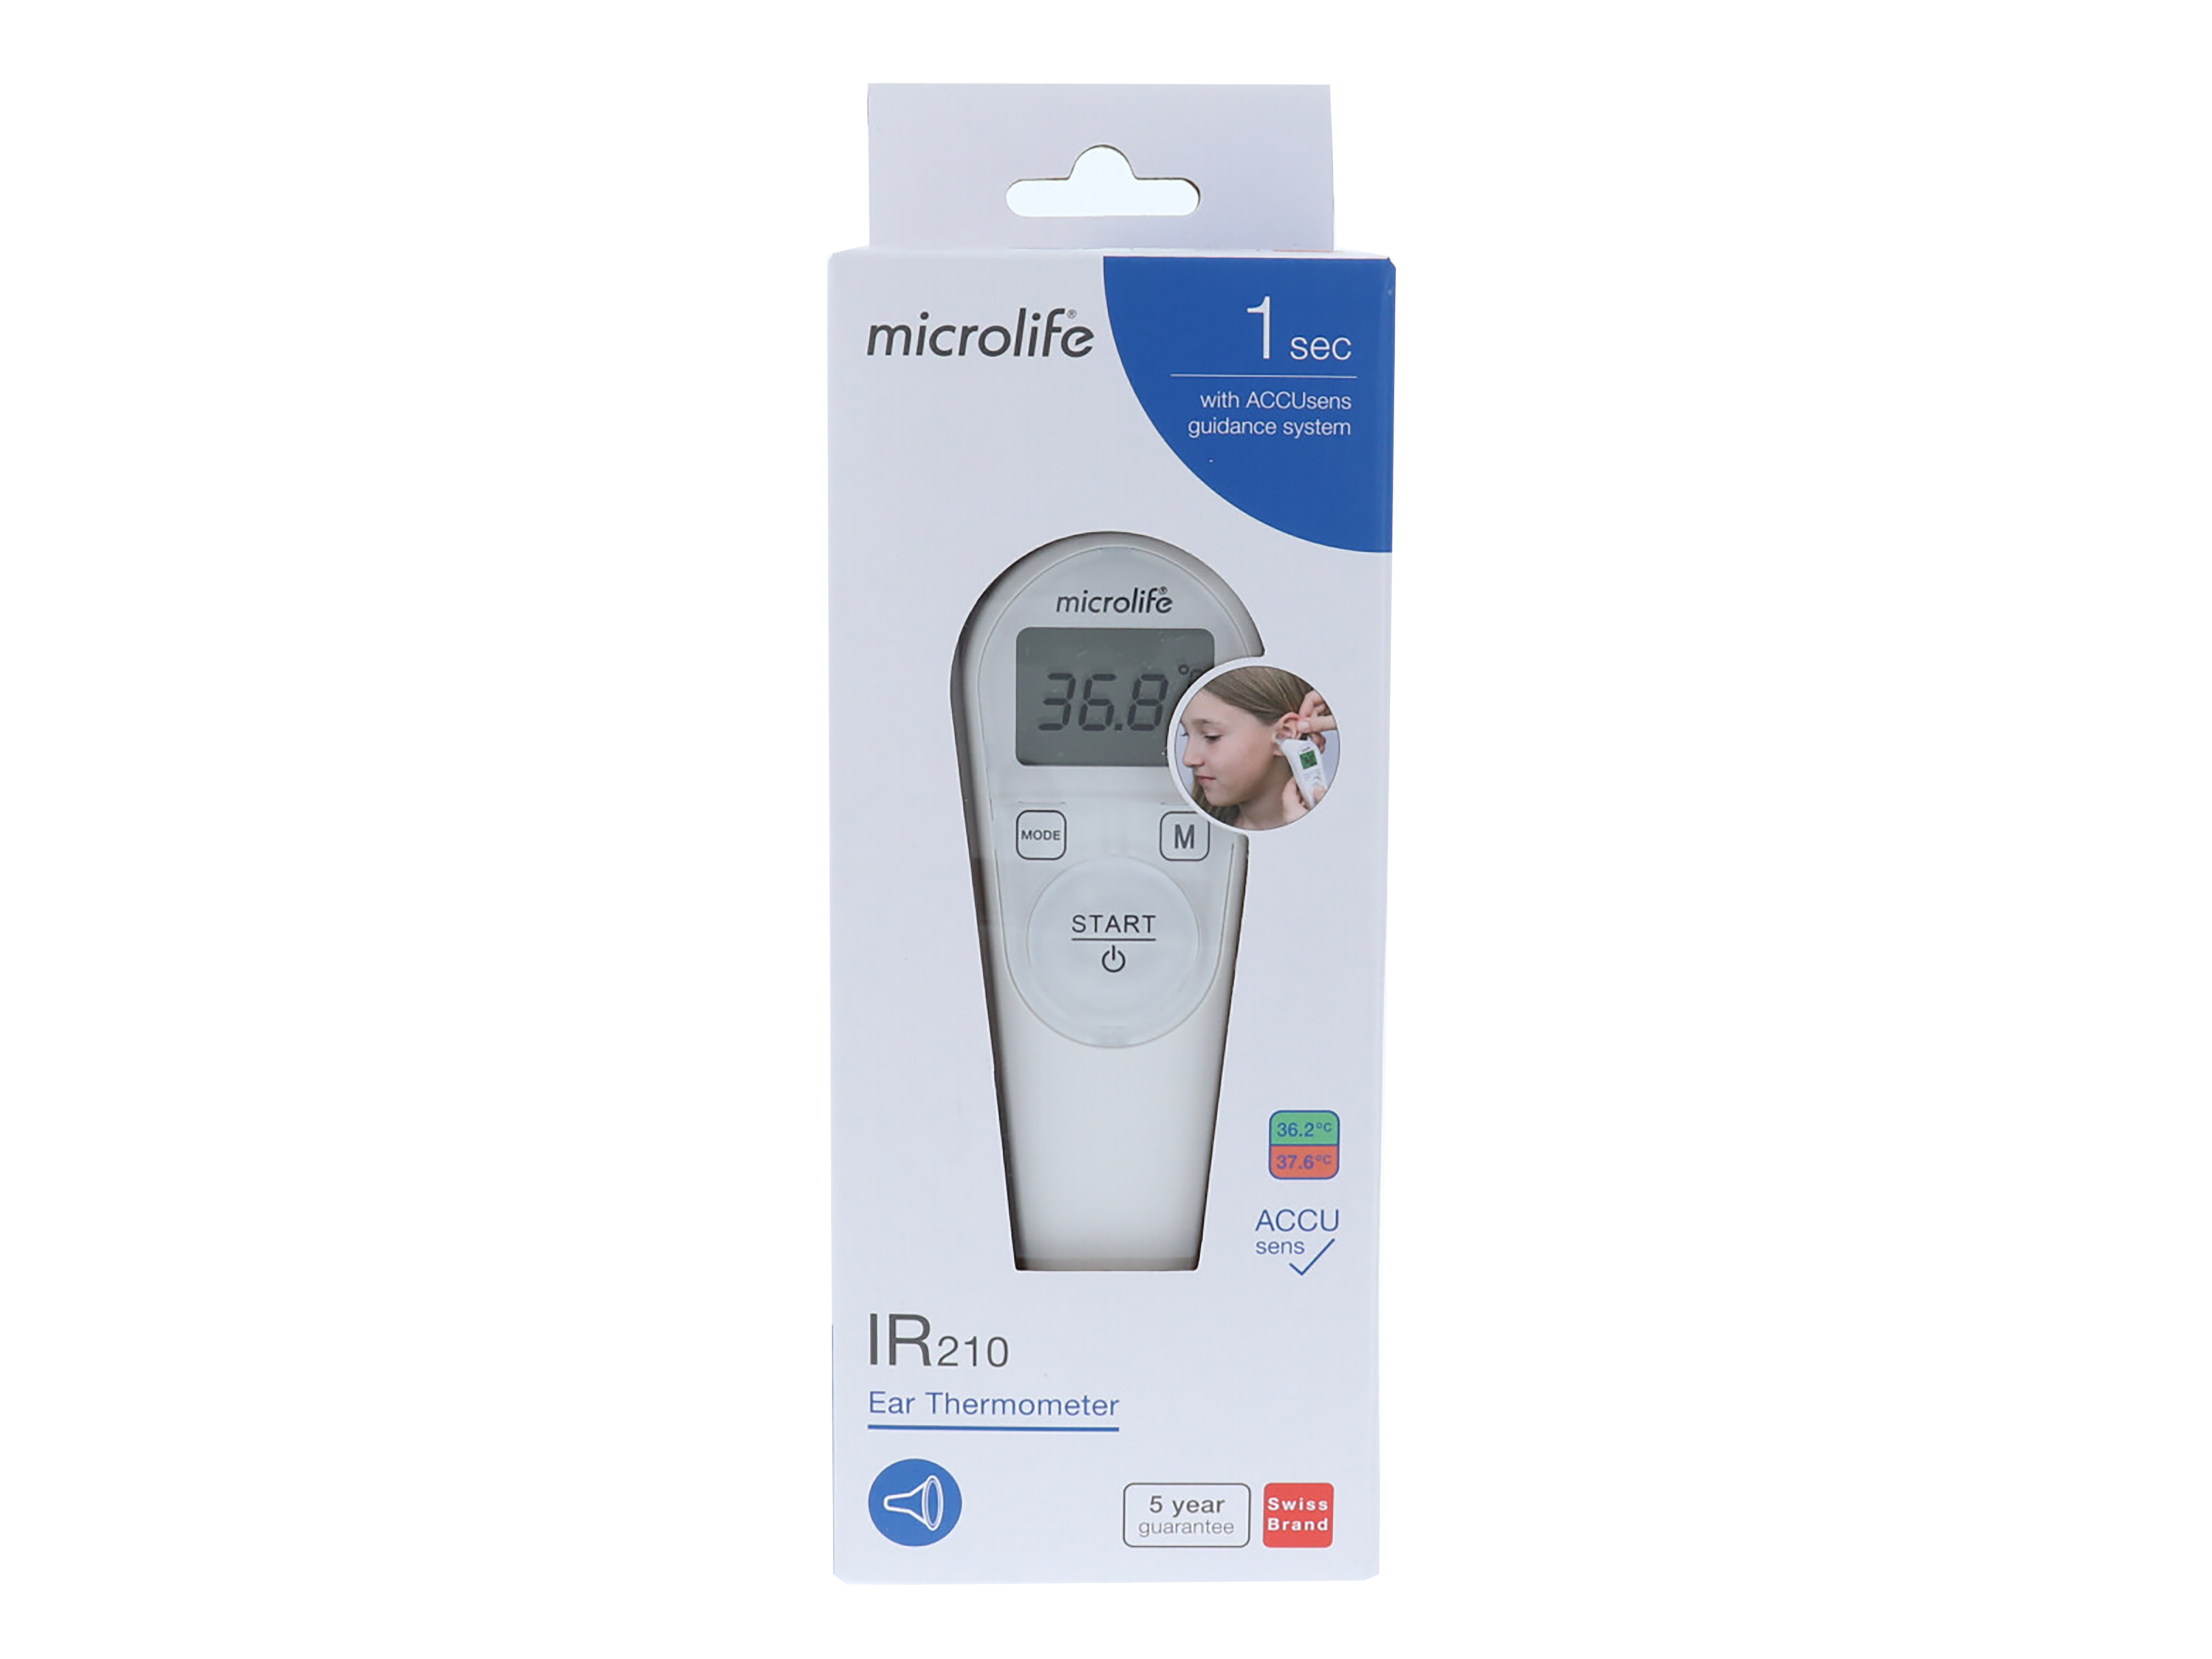 Microlife Ear Thermometer IR210, 1 stk.